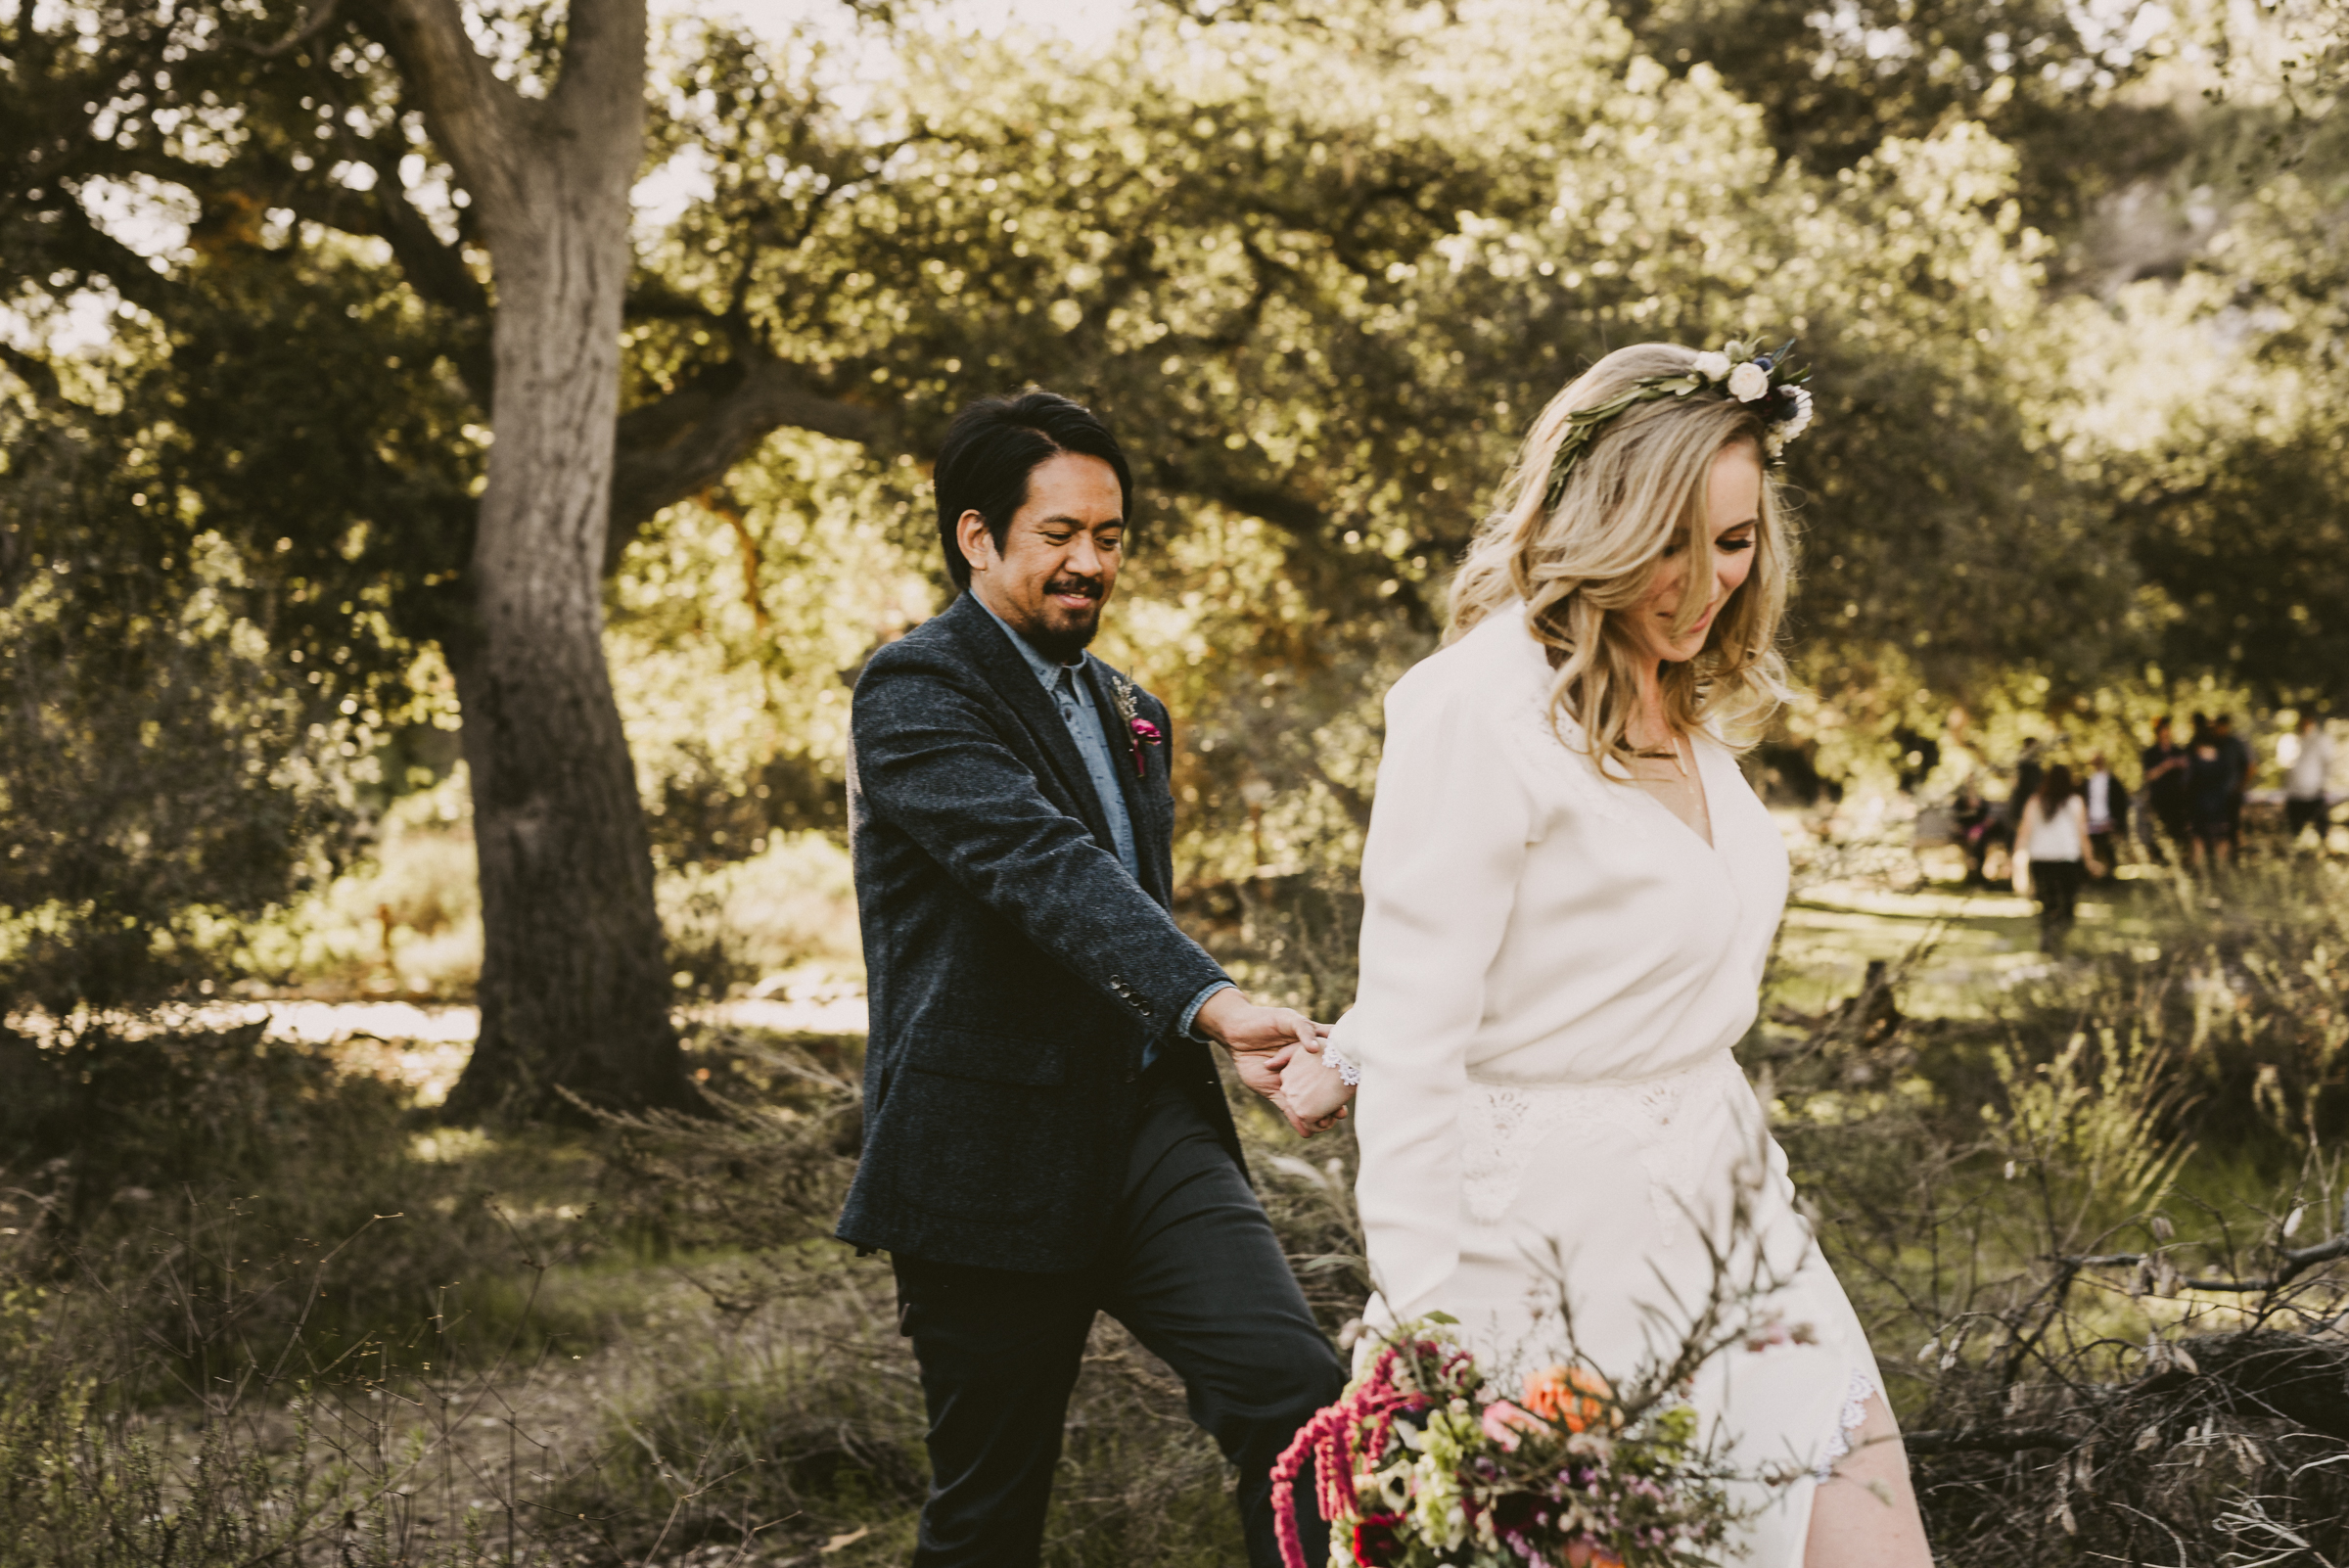 ©Isaiah + Taylor Photography - Intimate Elopement, Eaton Canyon, Los Angeles Wedding Photographer-53.jpg